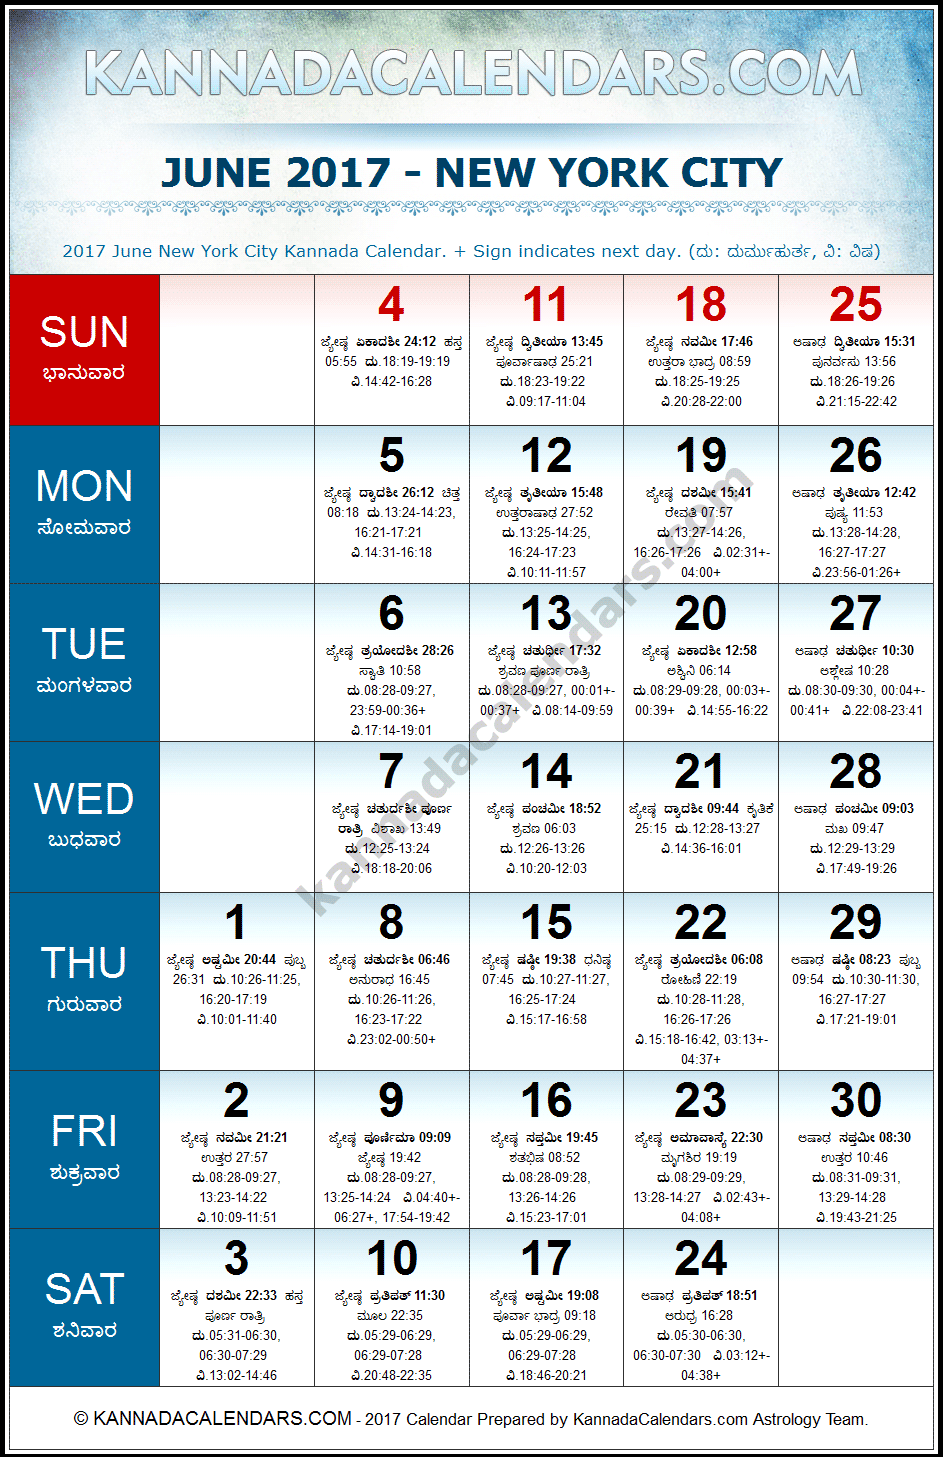 June 2017 Kannada Calendar for New York, USA